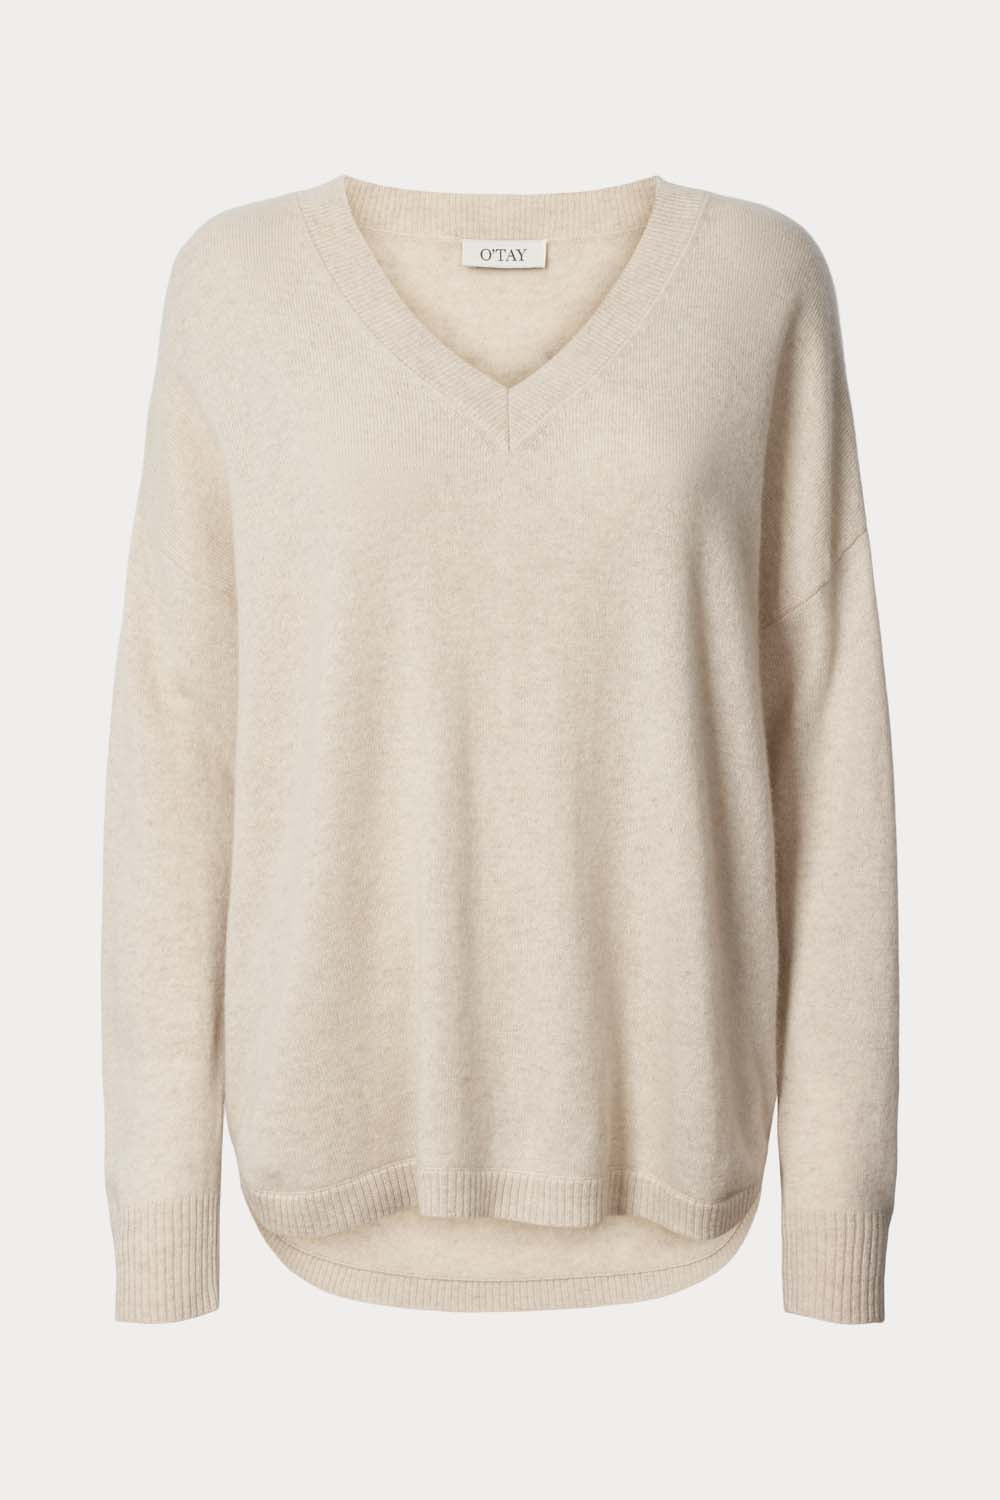 O'TAY Madeleine Sweater Blouses Warm Beige